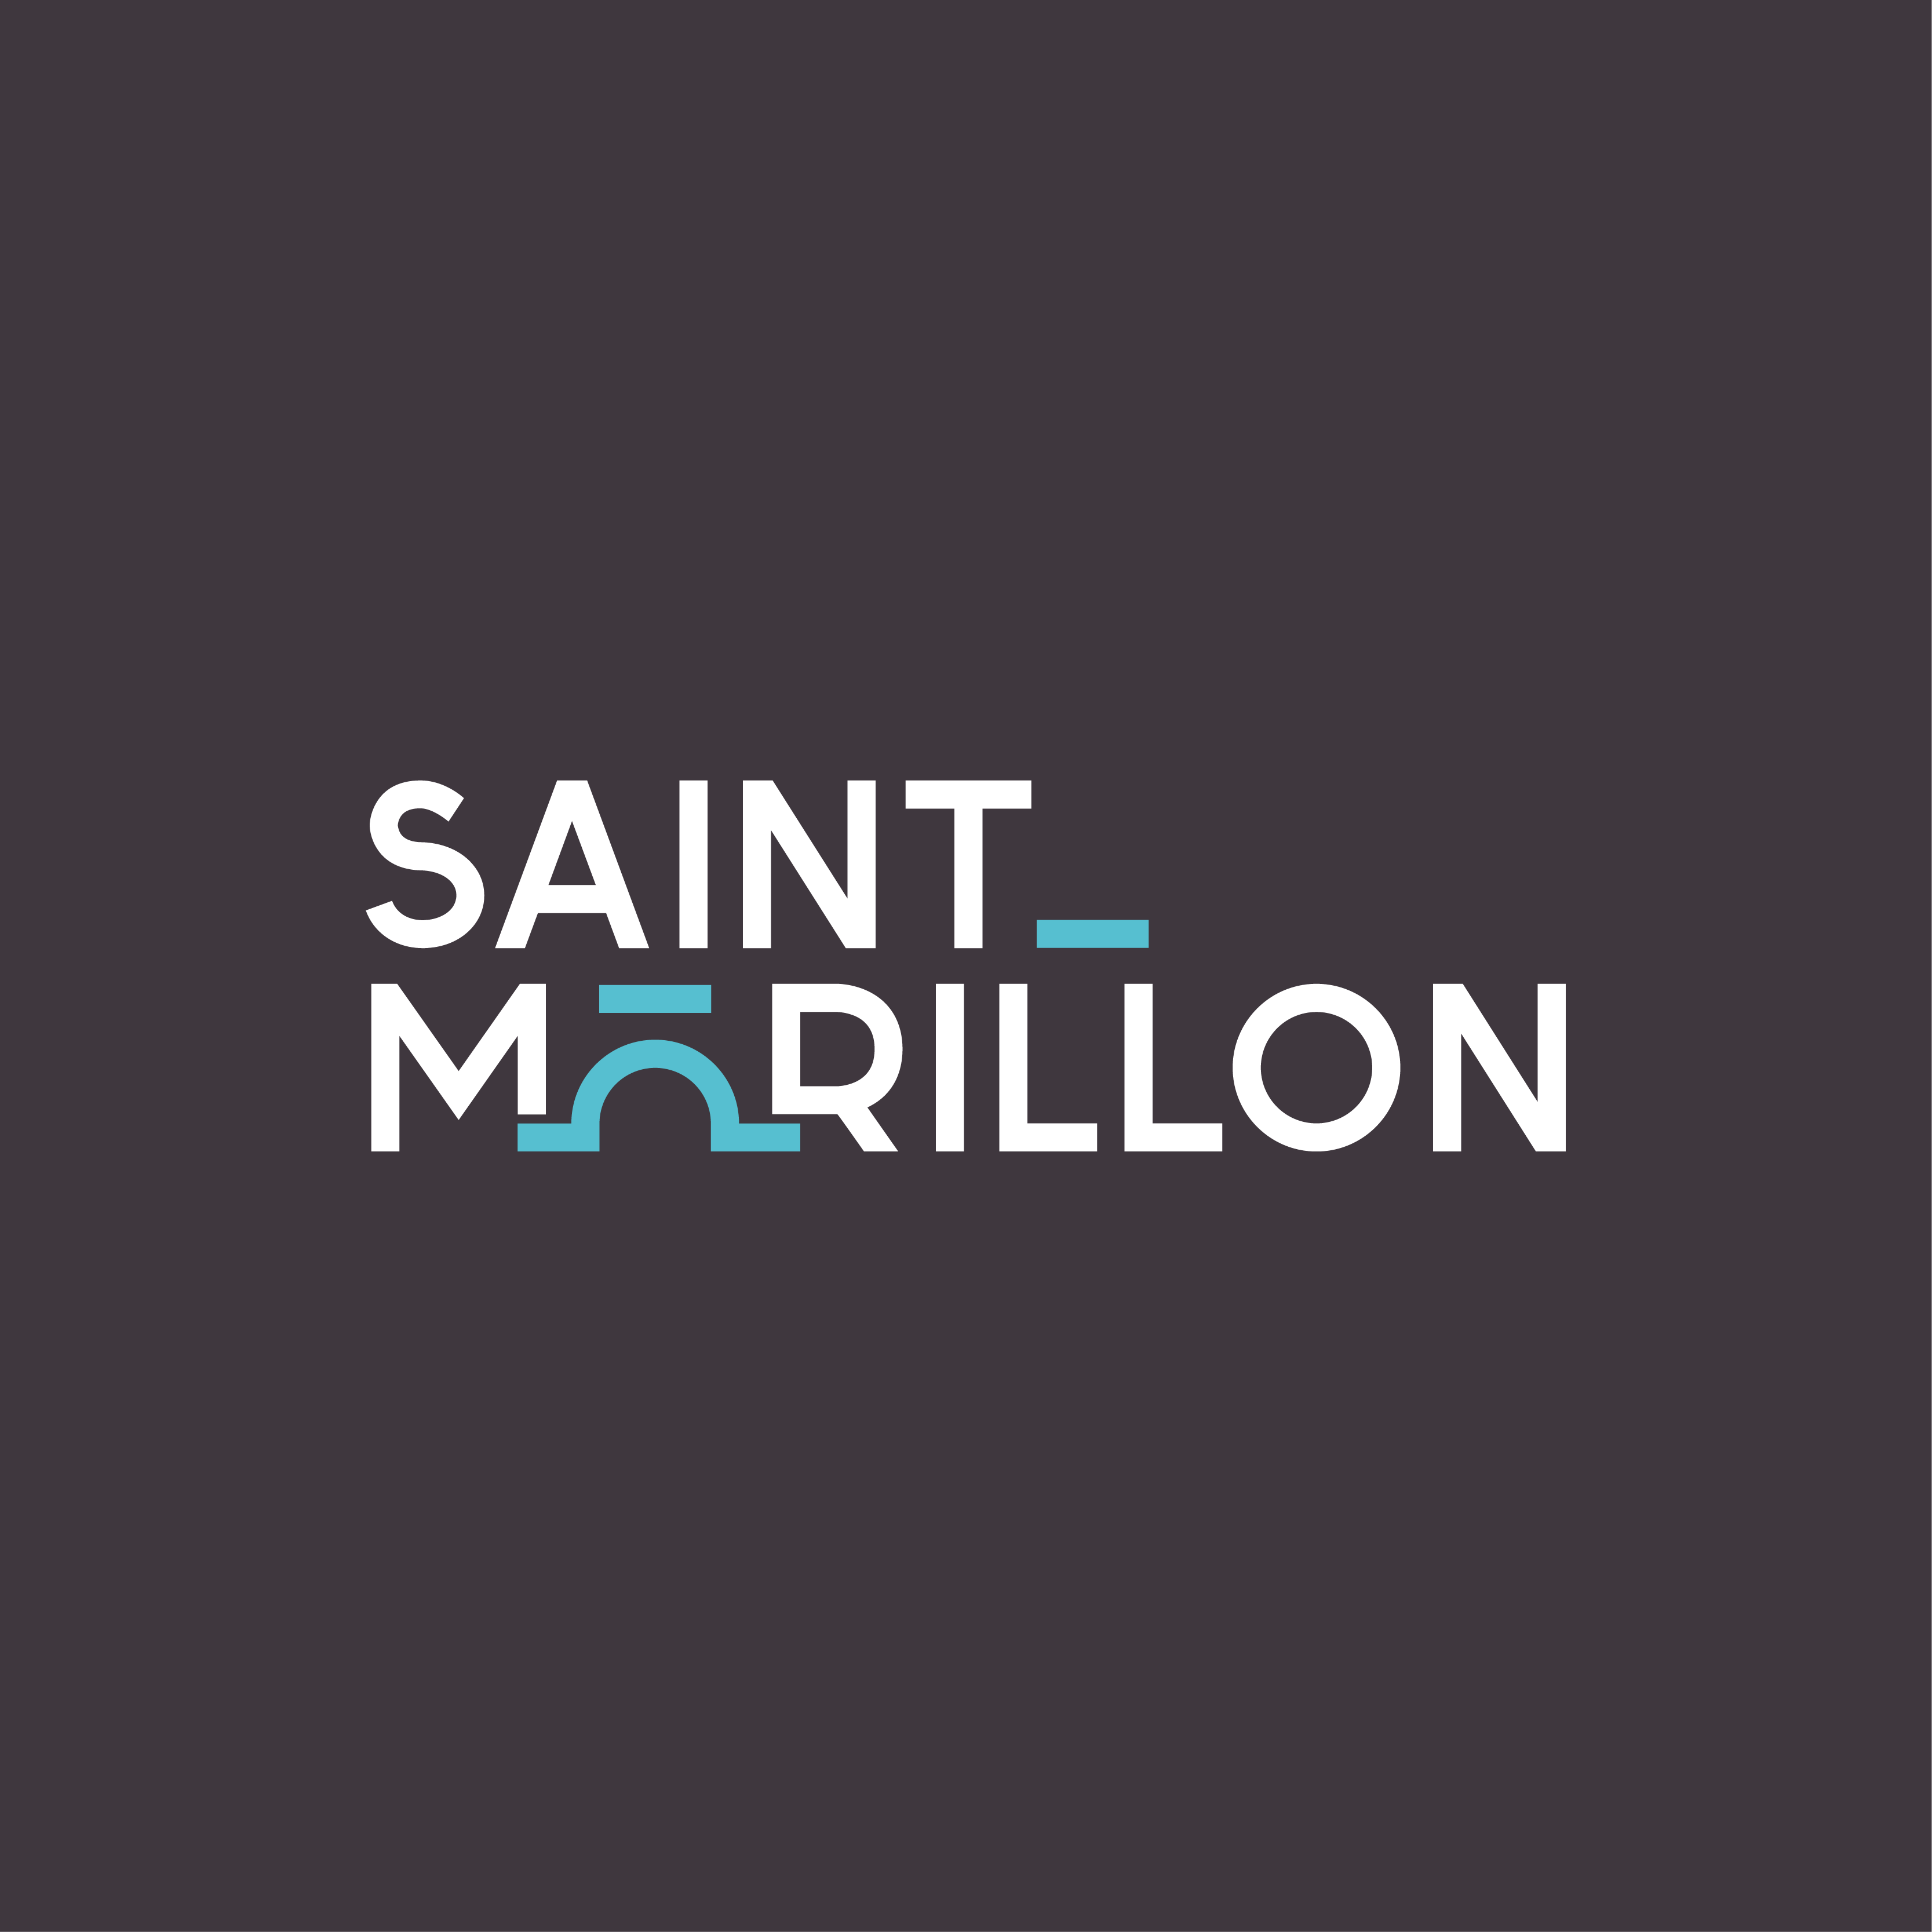 Saint Morillon